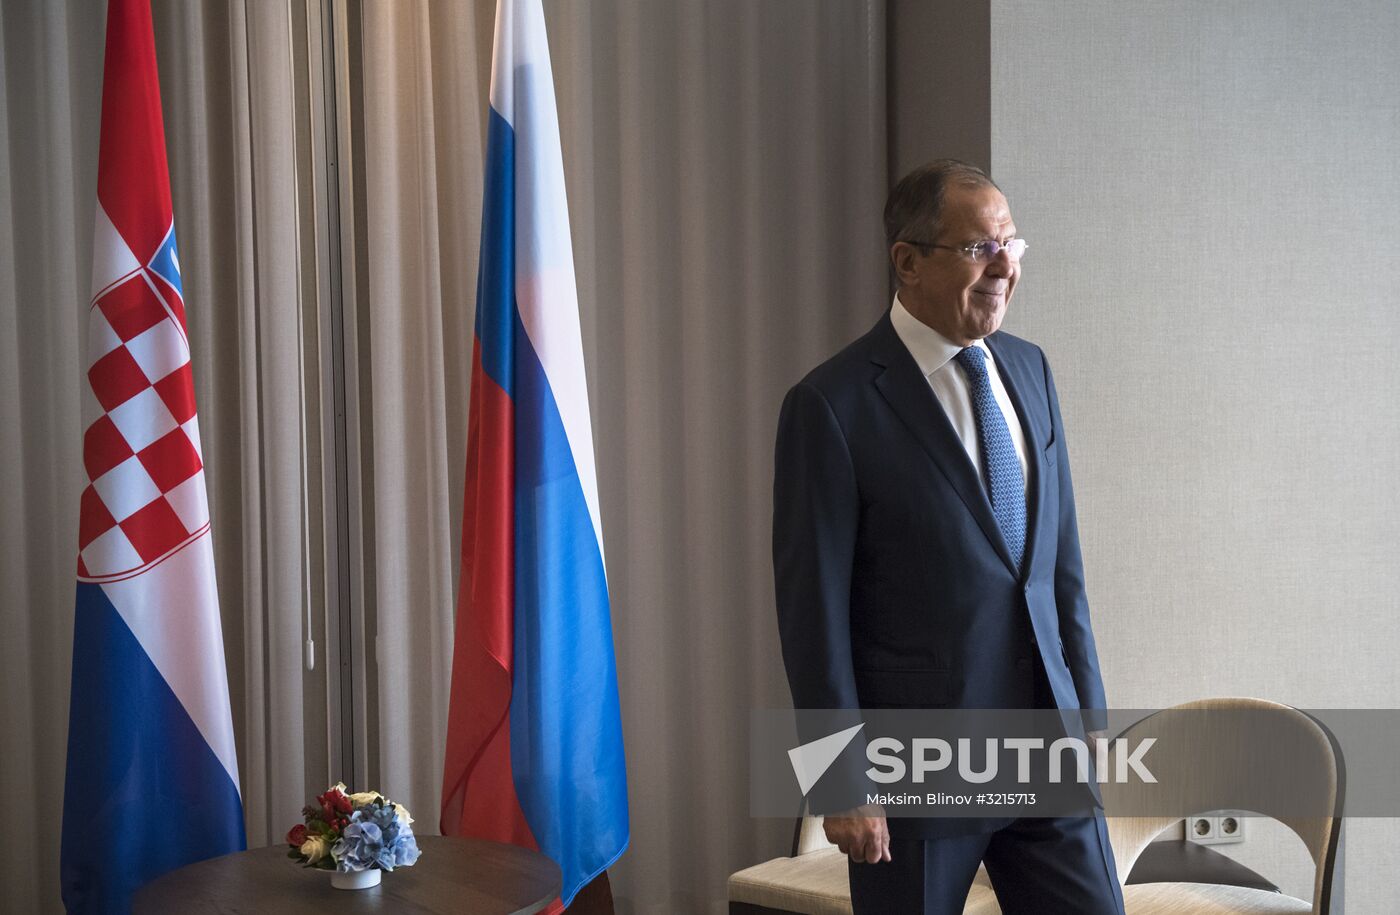 Russian Foreign Minister Sergei Lavrov meets with President of Croatia Kolinda Grabar-Kitarovic